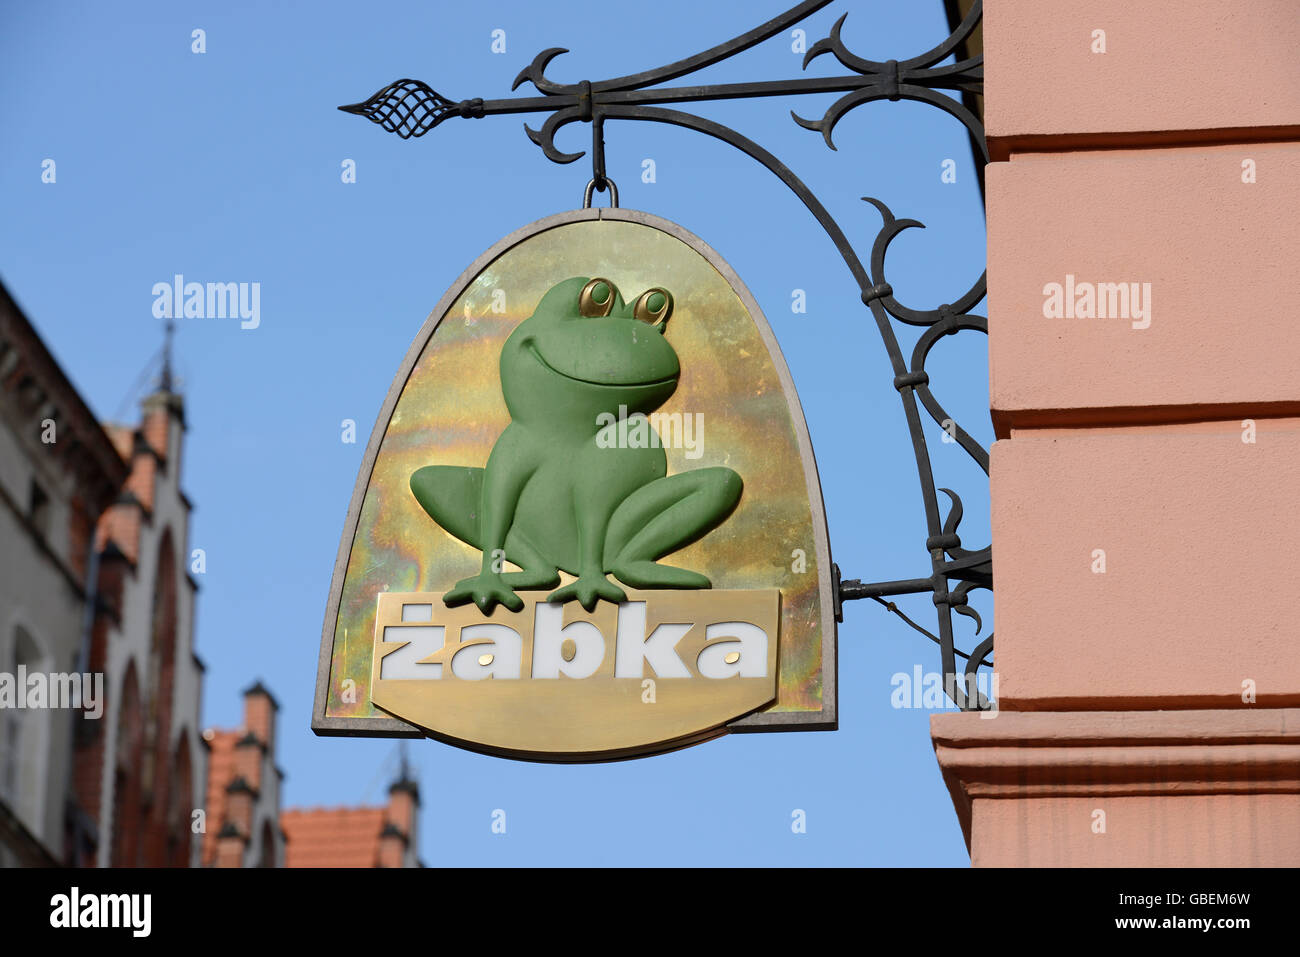 Zabka Werbeschild, Lebensmittel, Altstadt, Breslau, Niederschlesien, Polen Banque D'Images